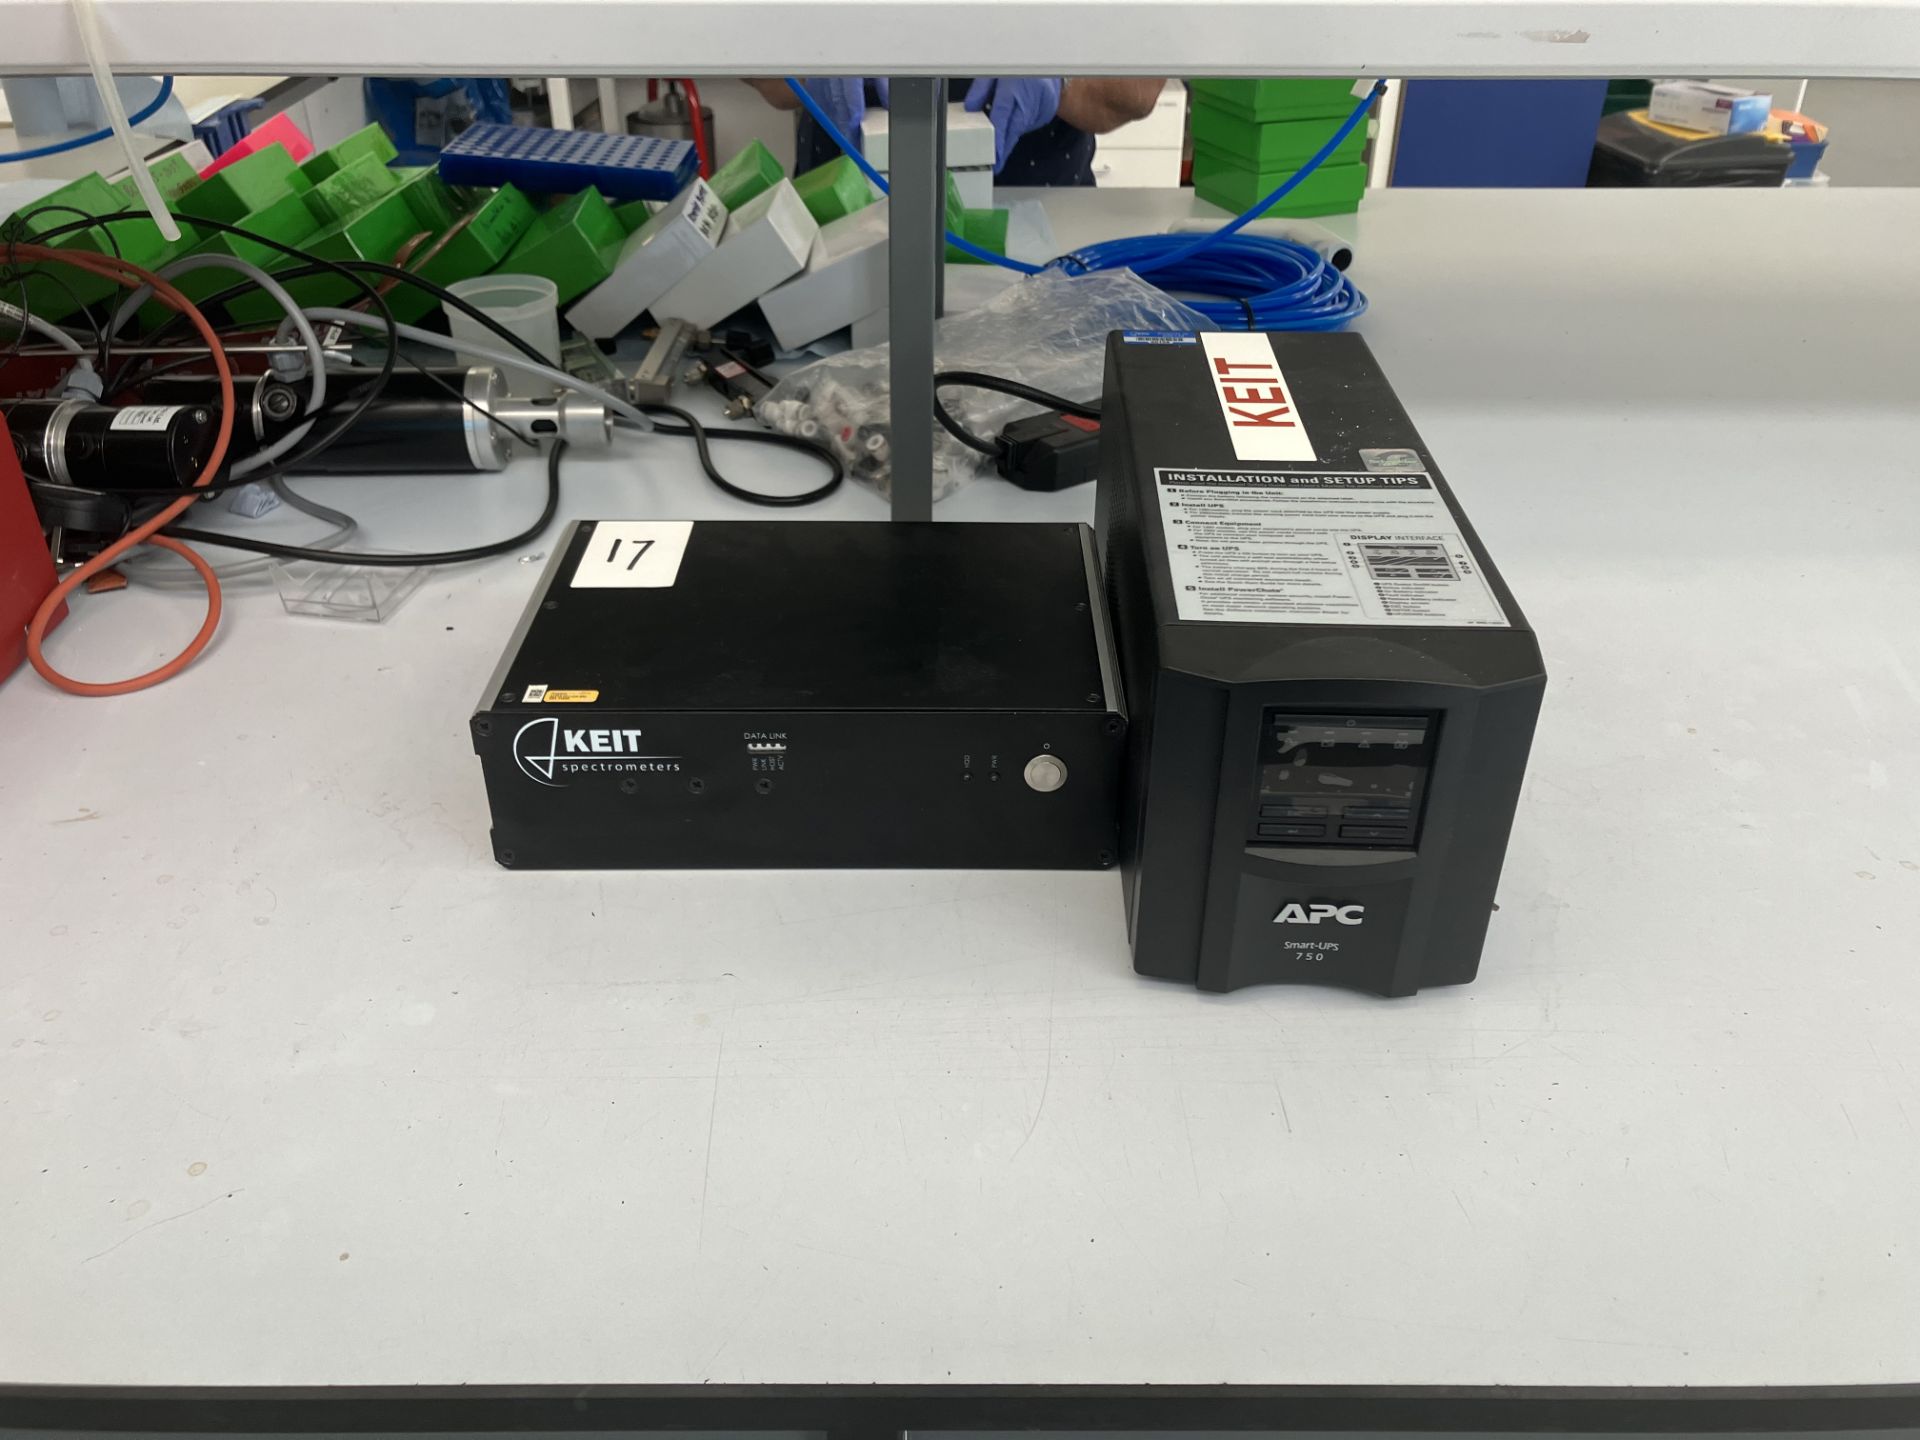 Keit spectrometer datalink box with Smart UPS 750